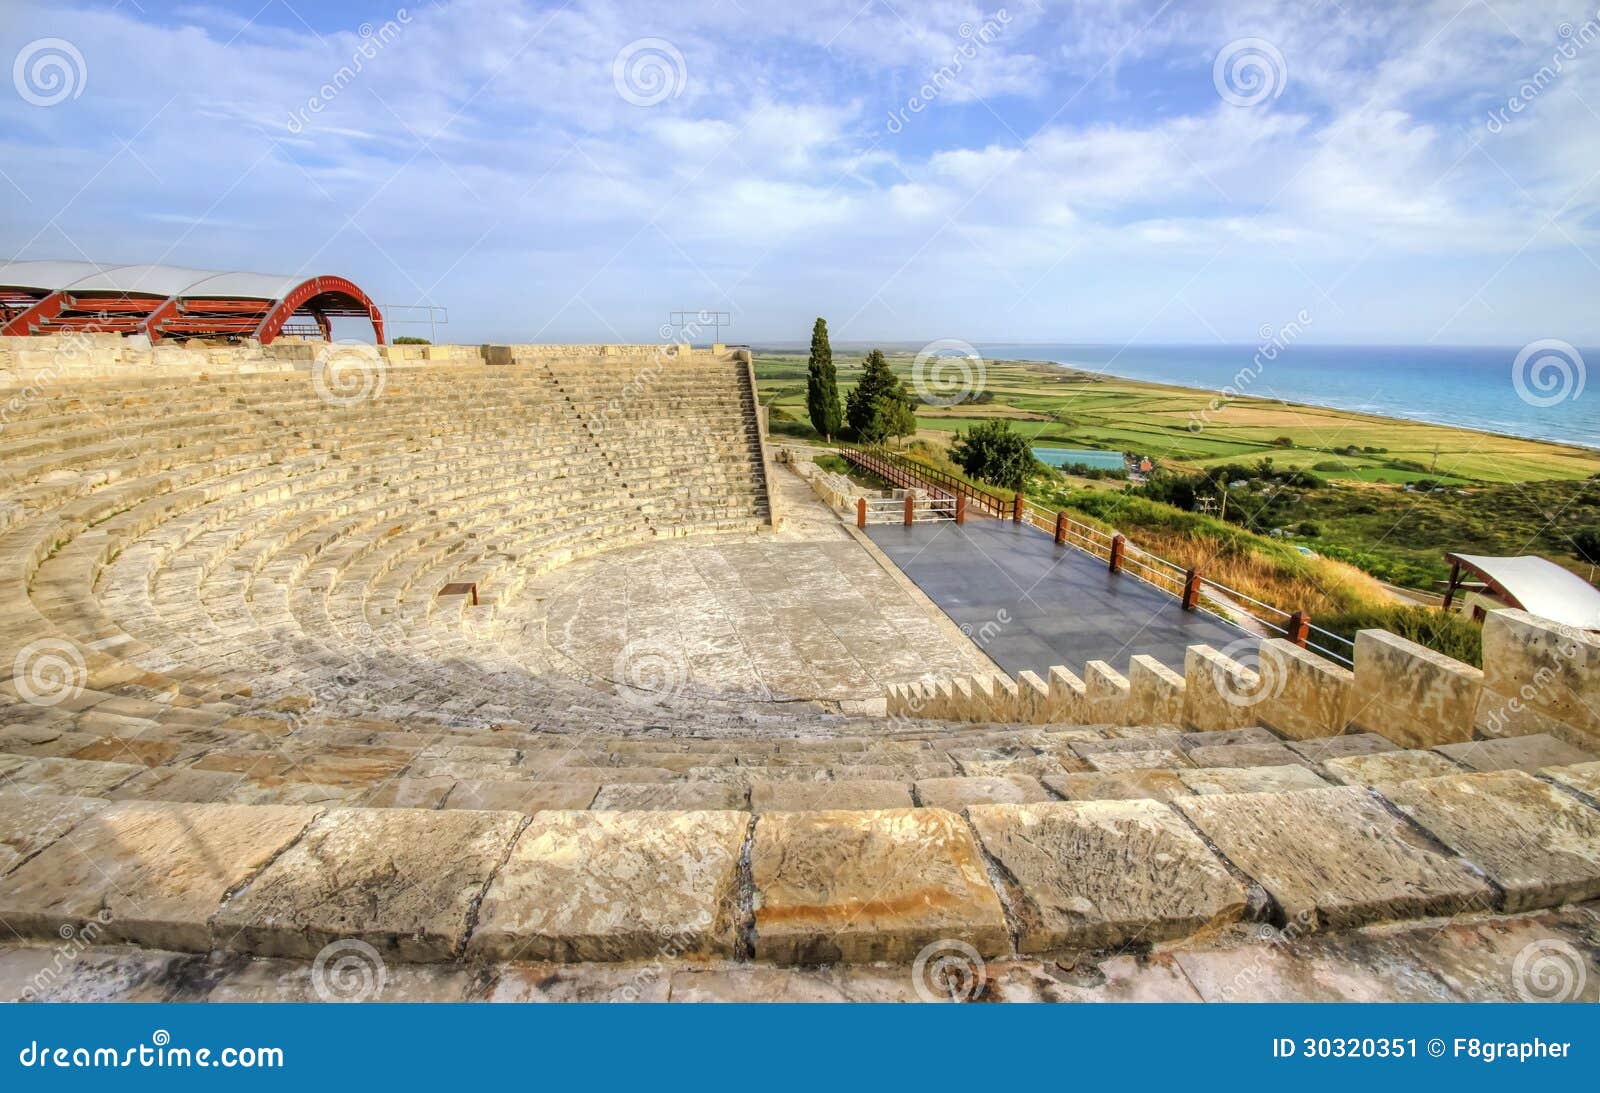 ancient theatre of kourion, limassol, cyprus